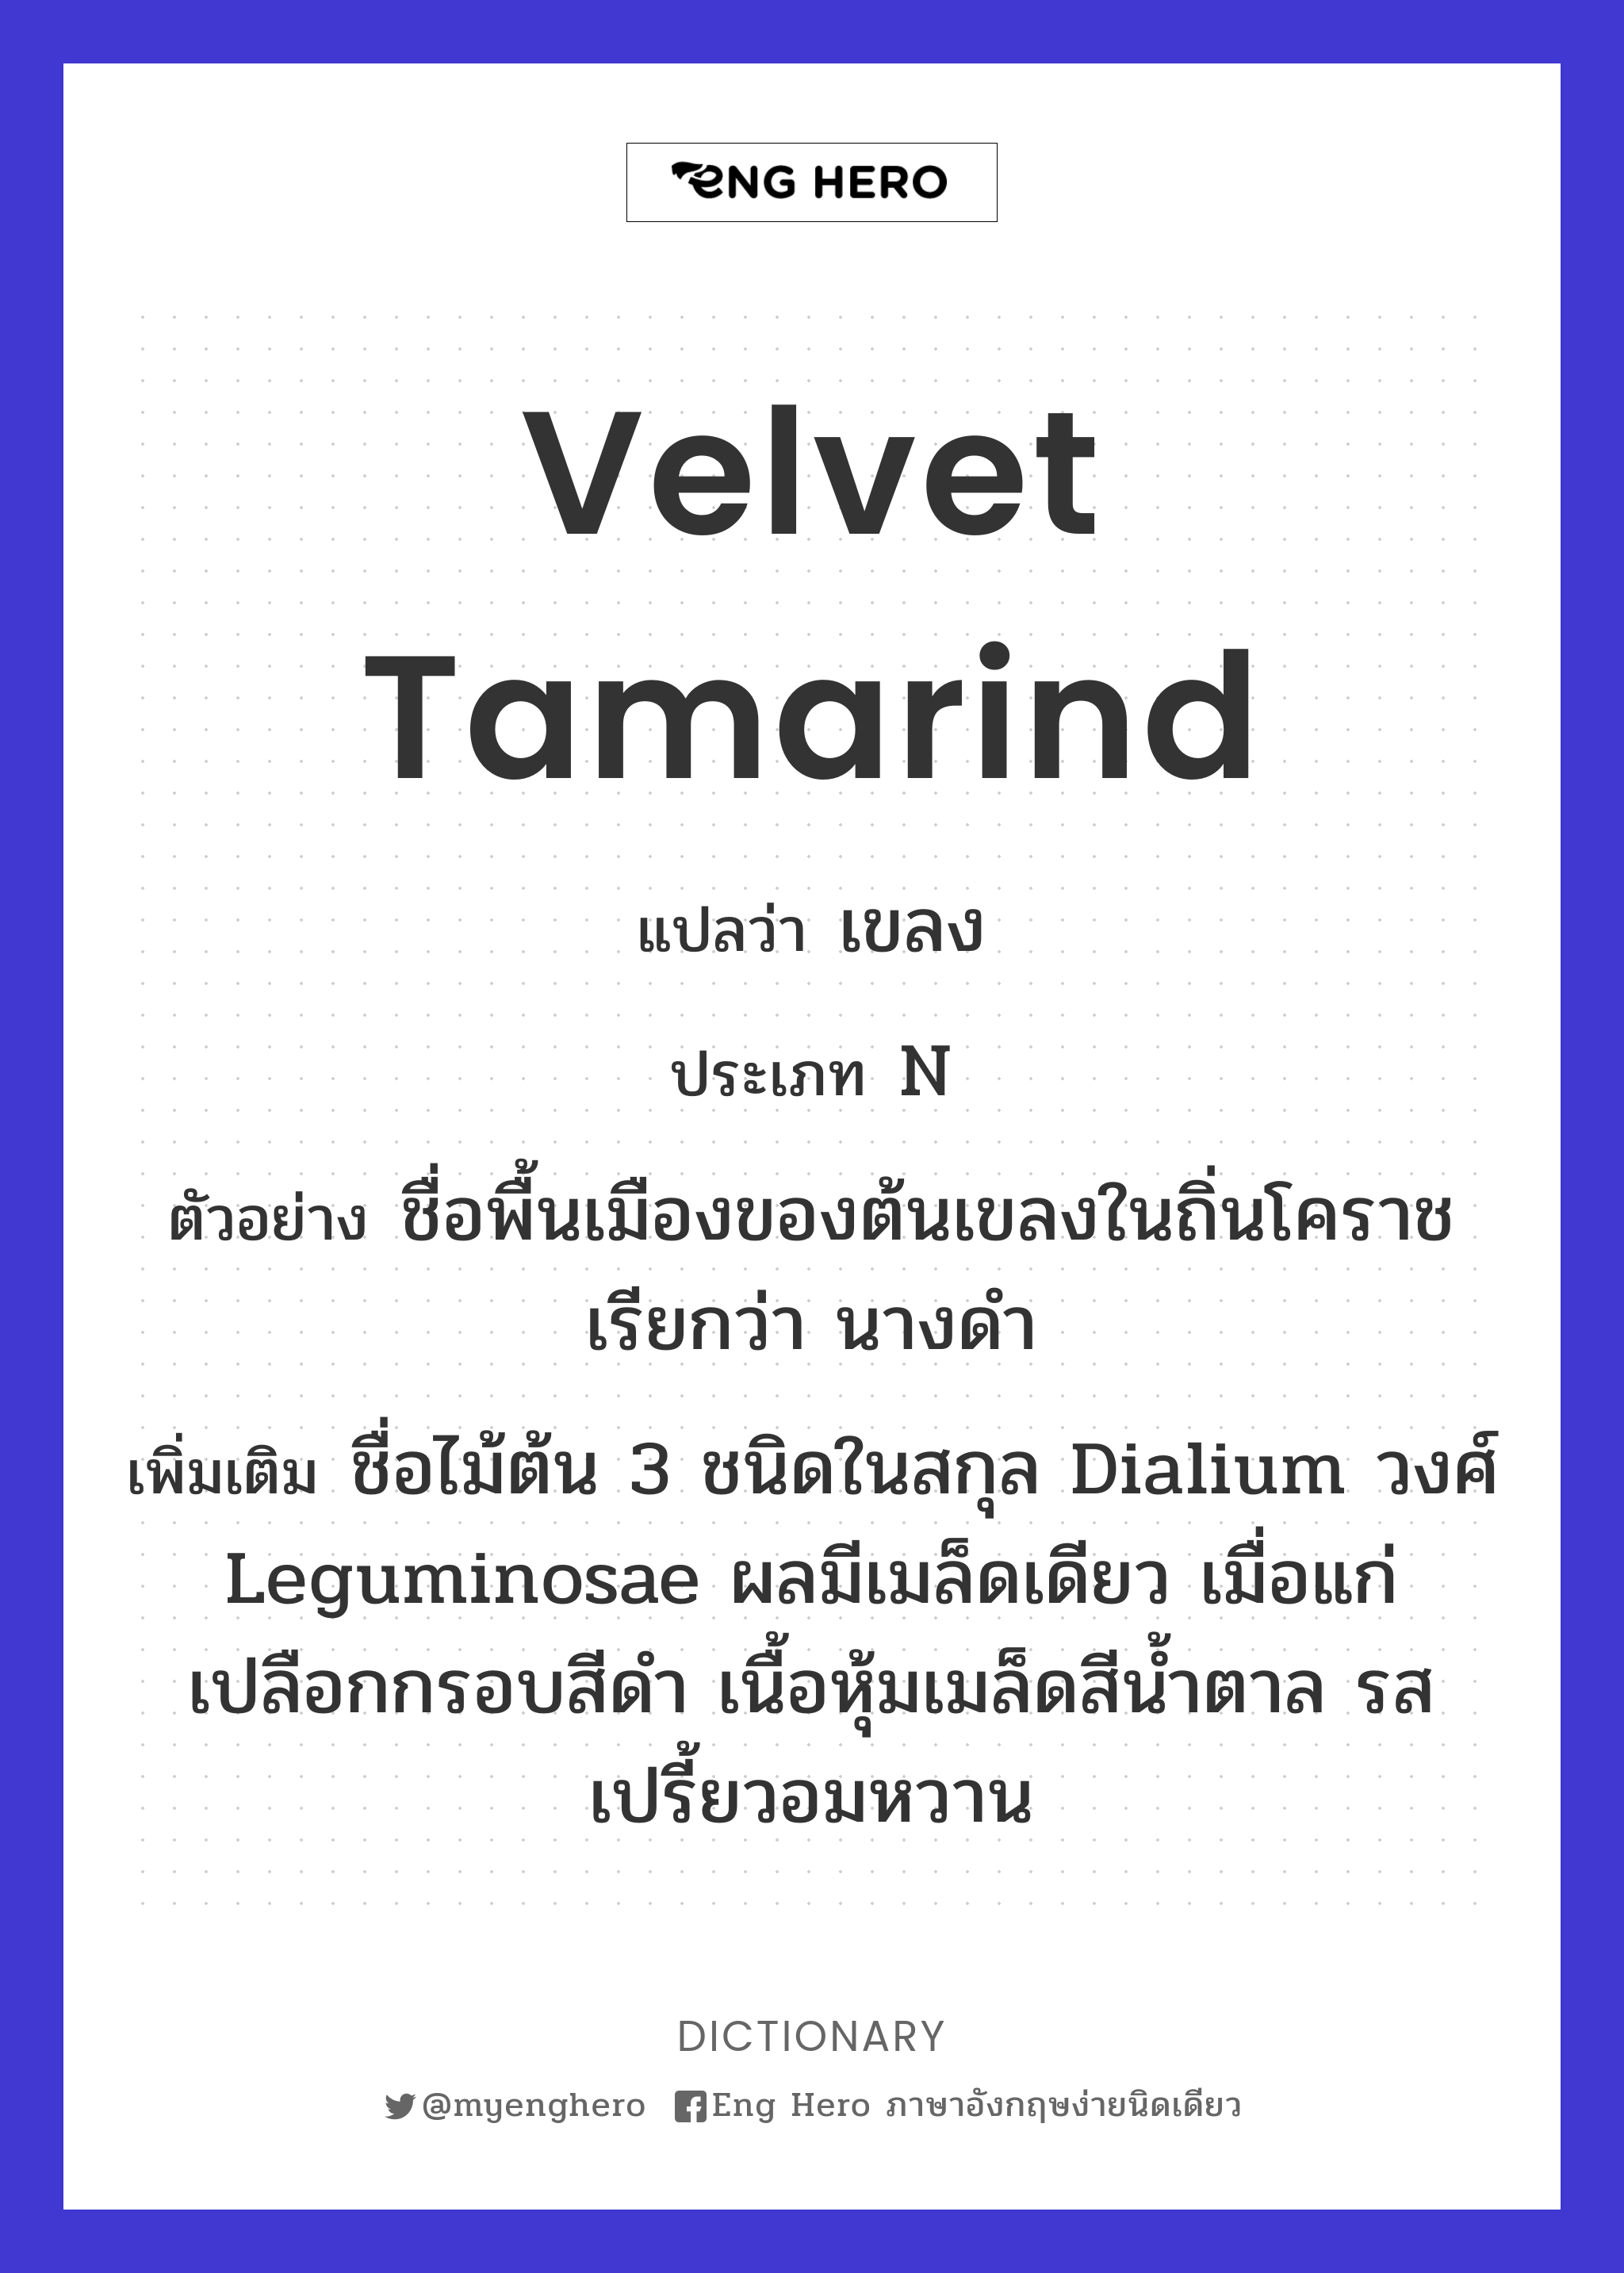 Velvet tamarind